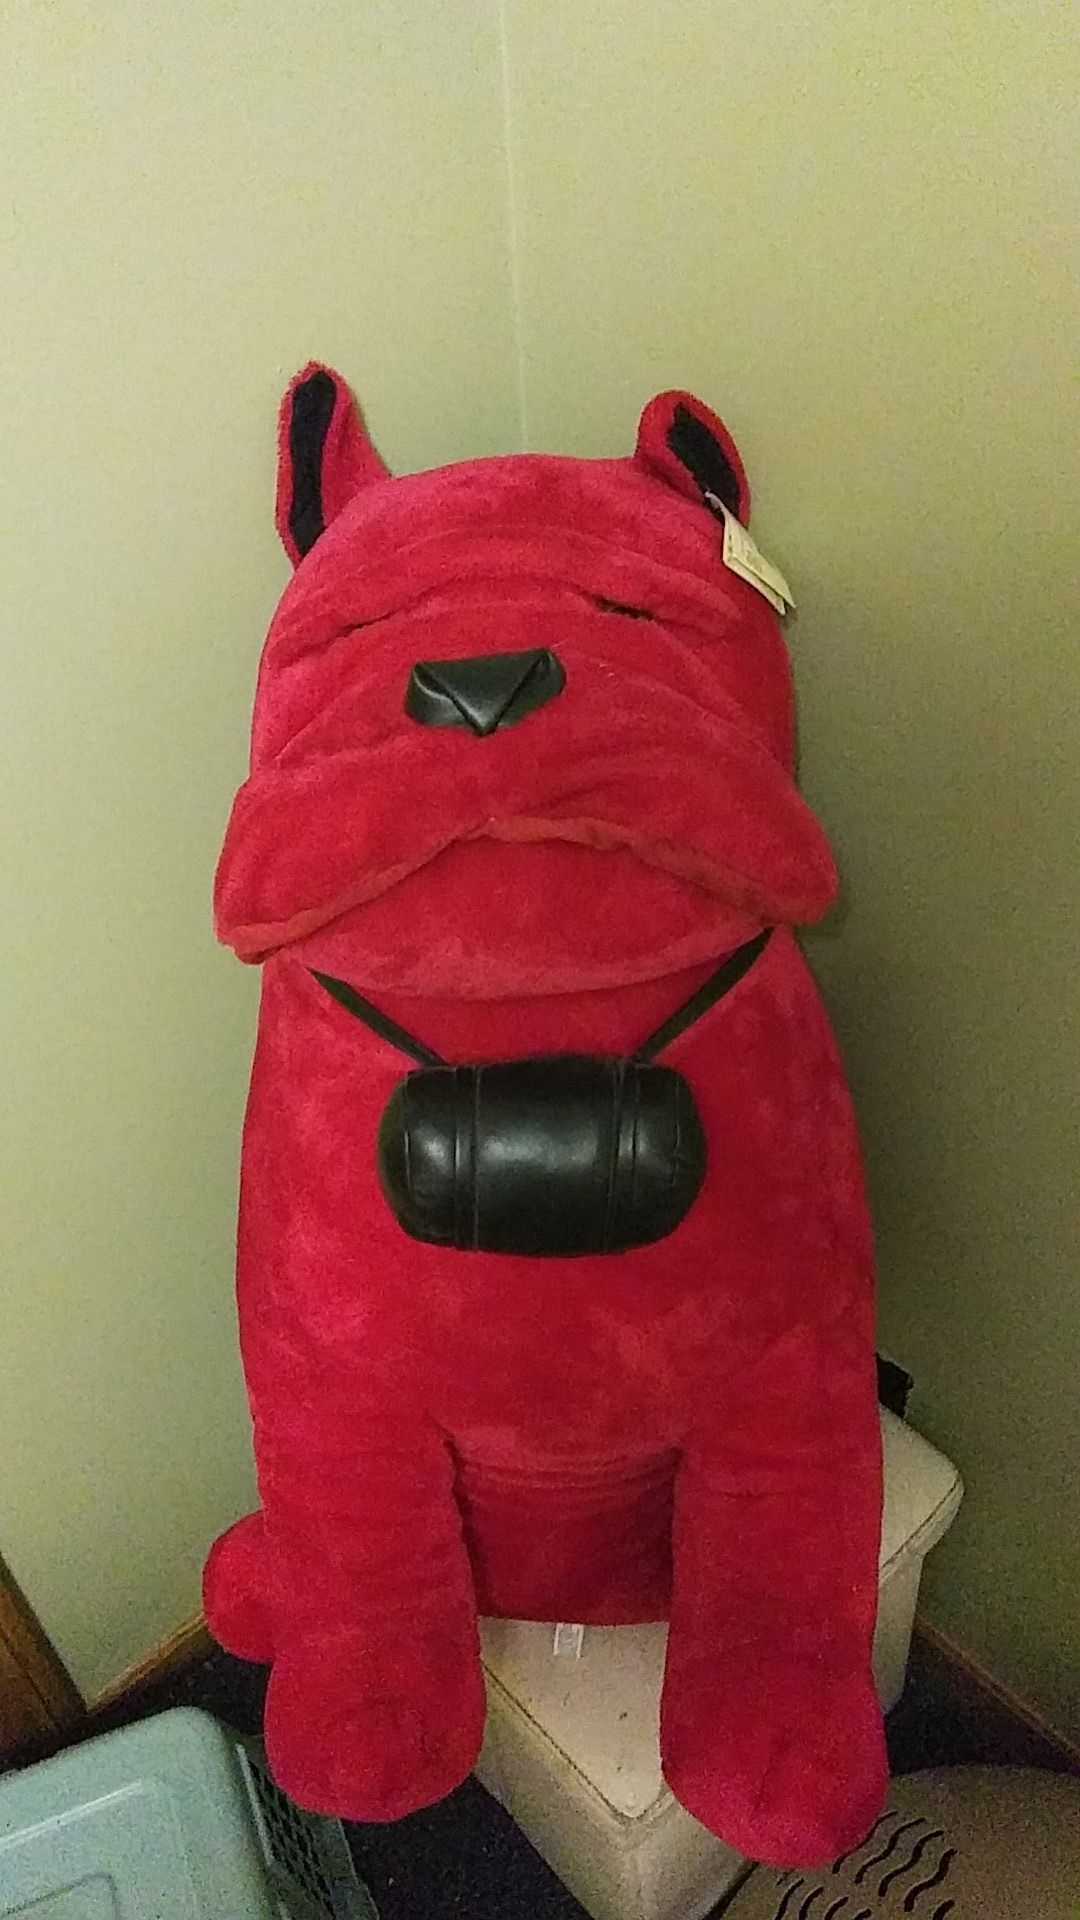 Red Bulldog stuffed animal. Free!